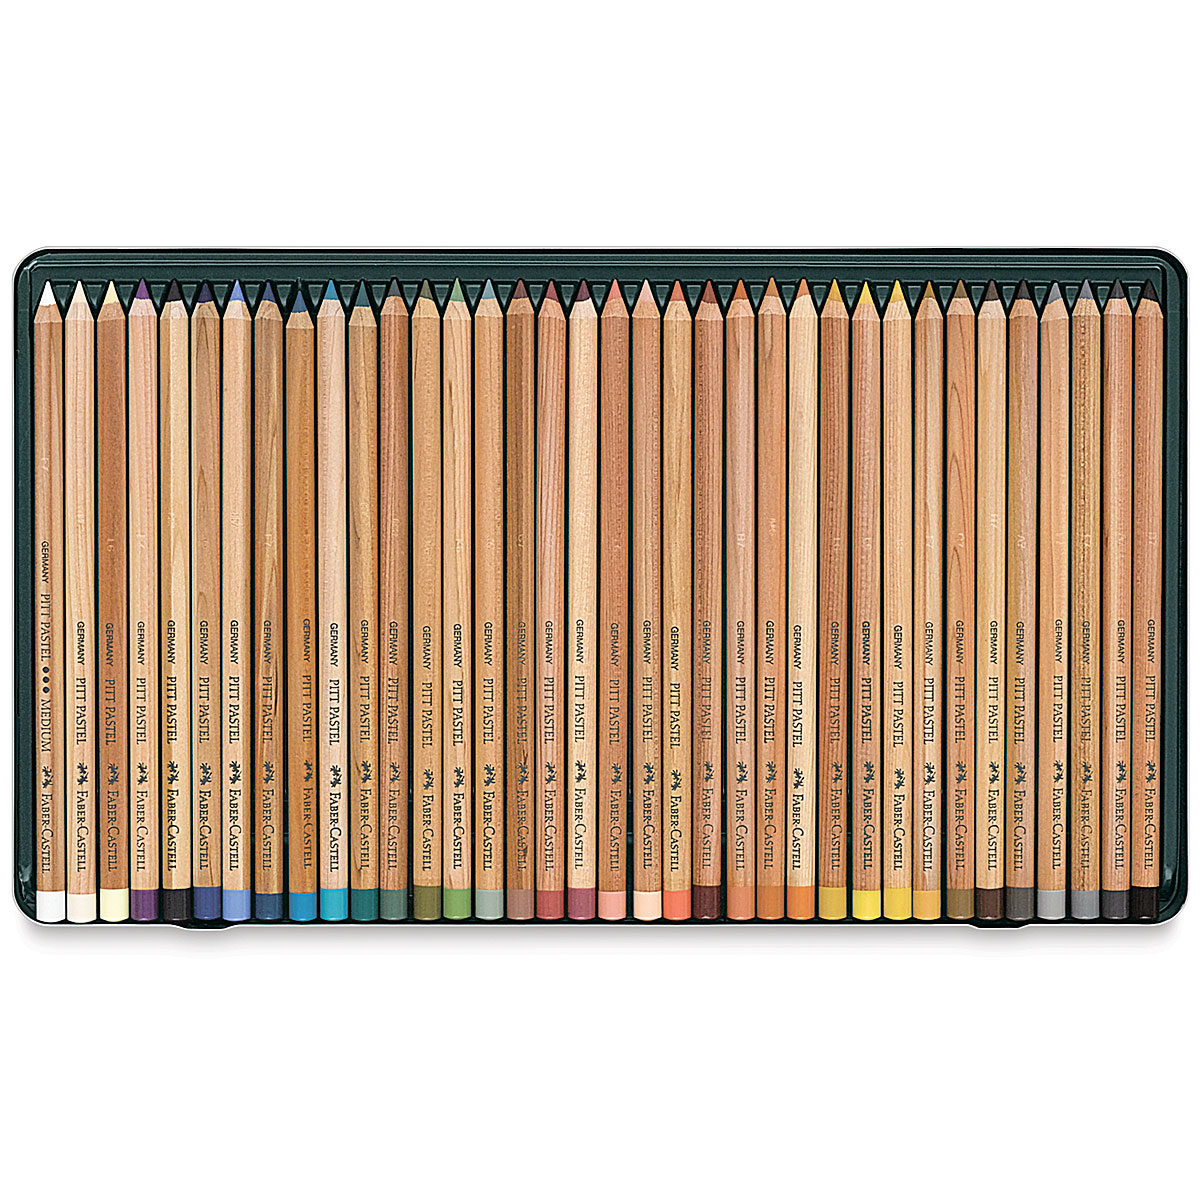 PITT Pastel Pencil - 157 Dark Indigo